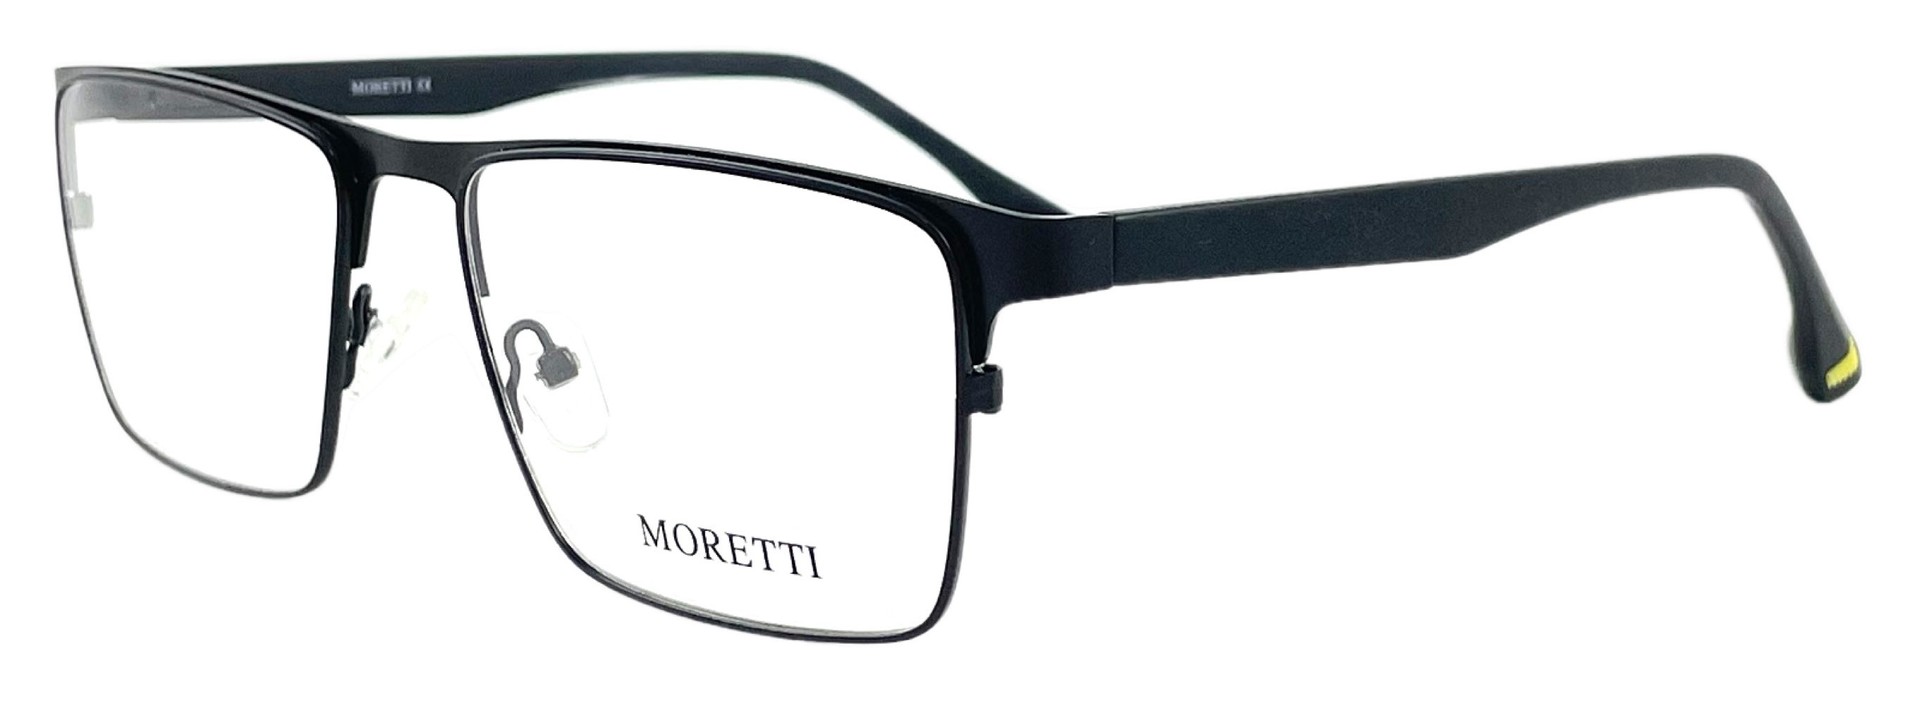 Moretti XTK61010 C1 2